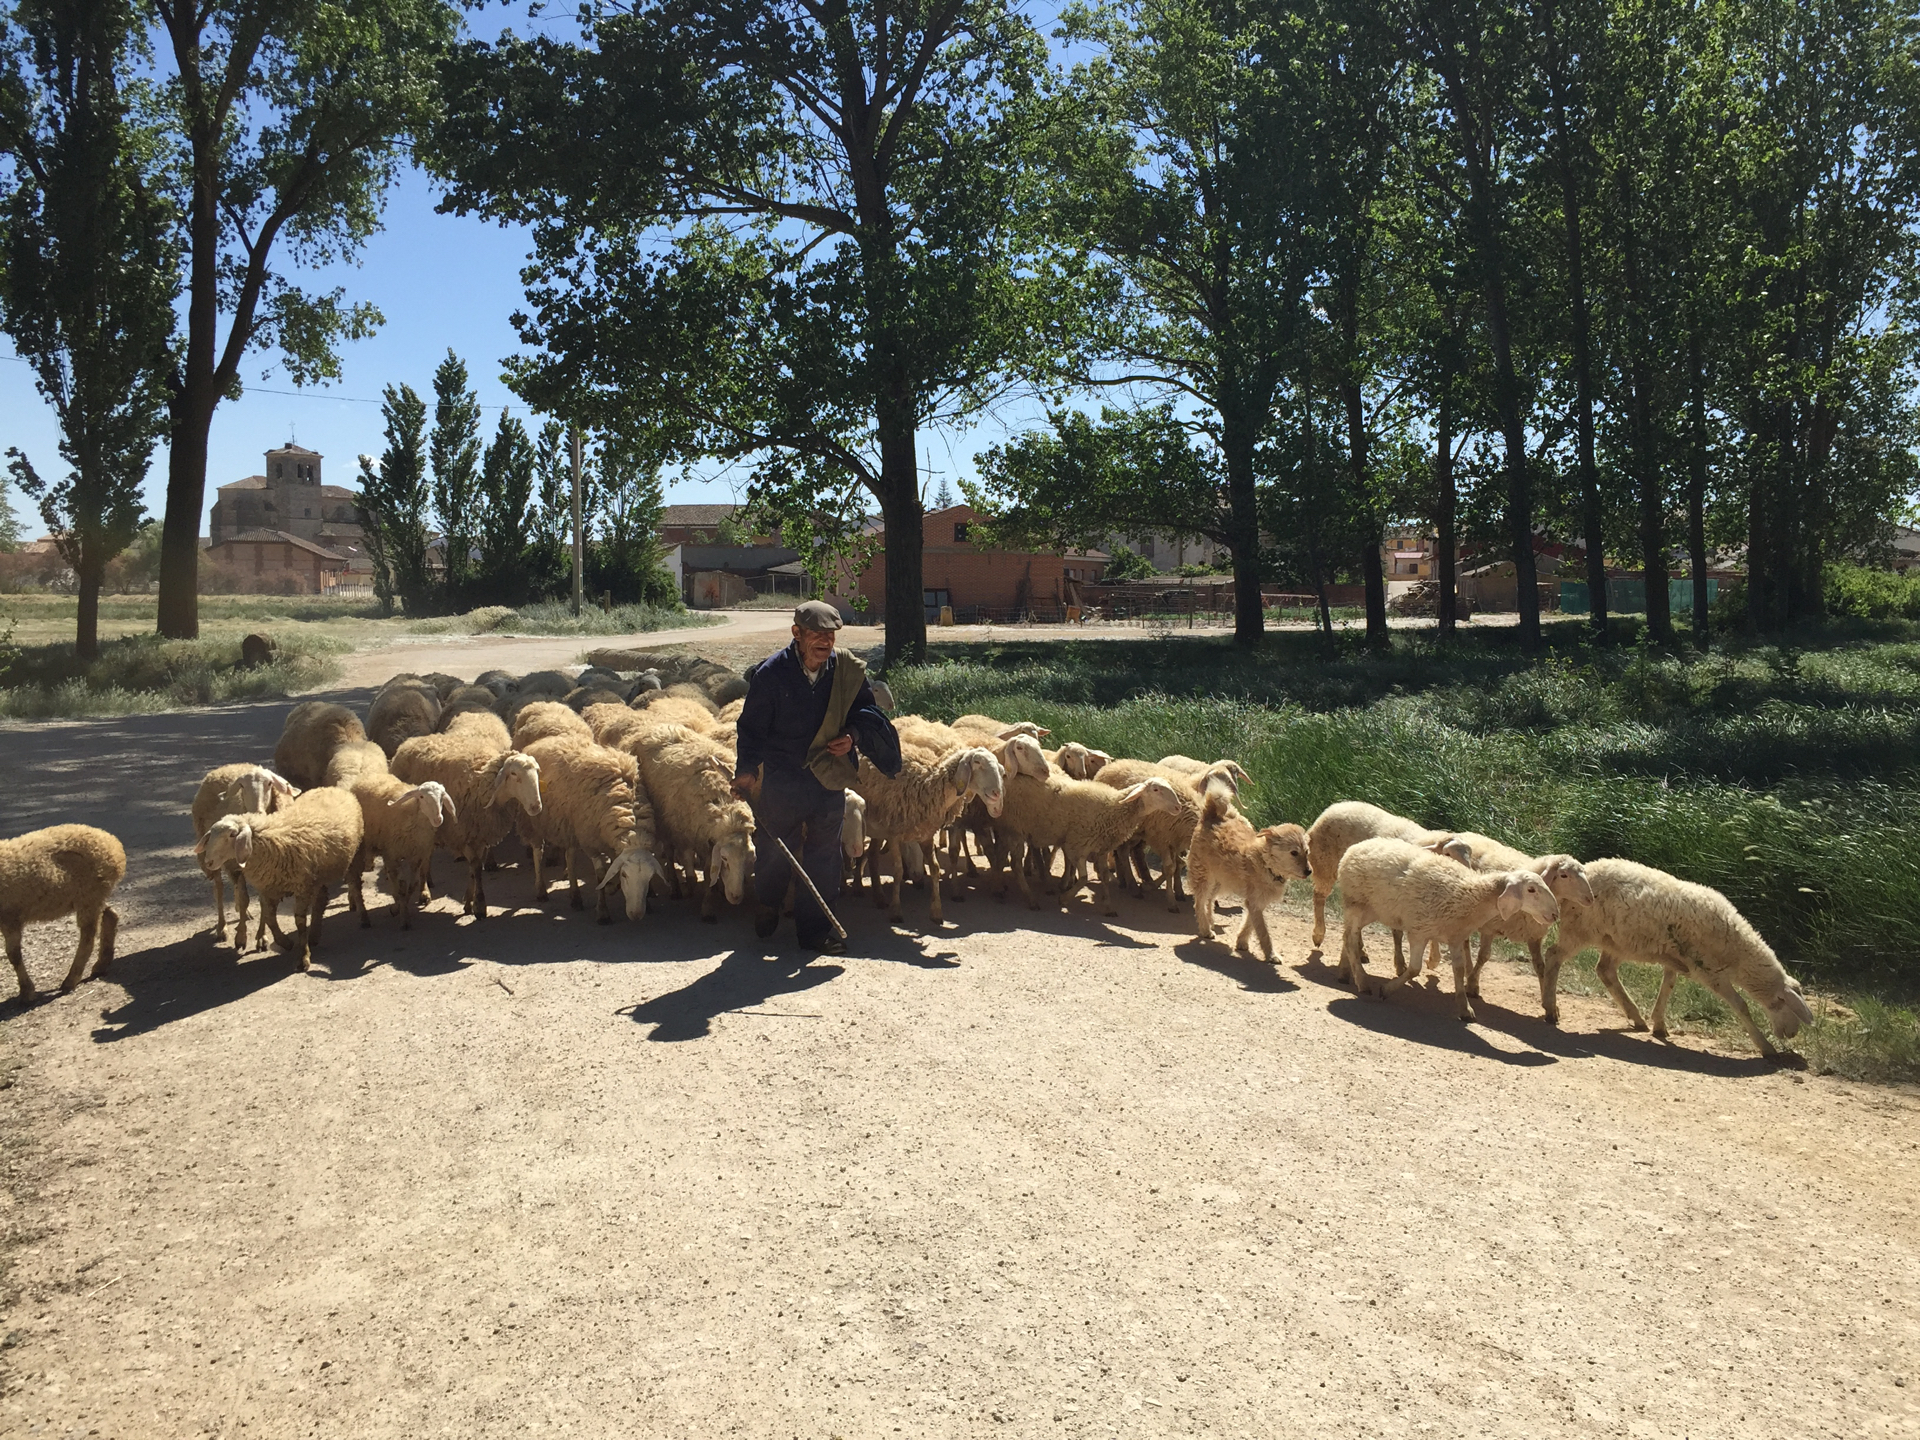 A shepherd guides sheep down a road near Boadilla del Camino, Spain.